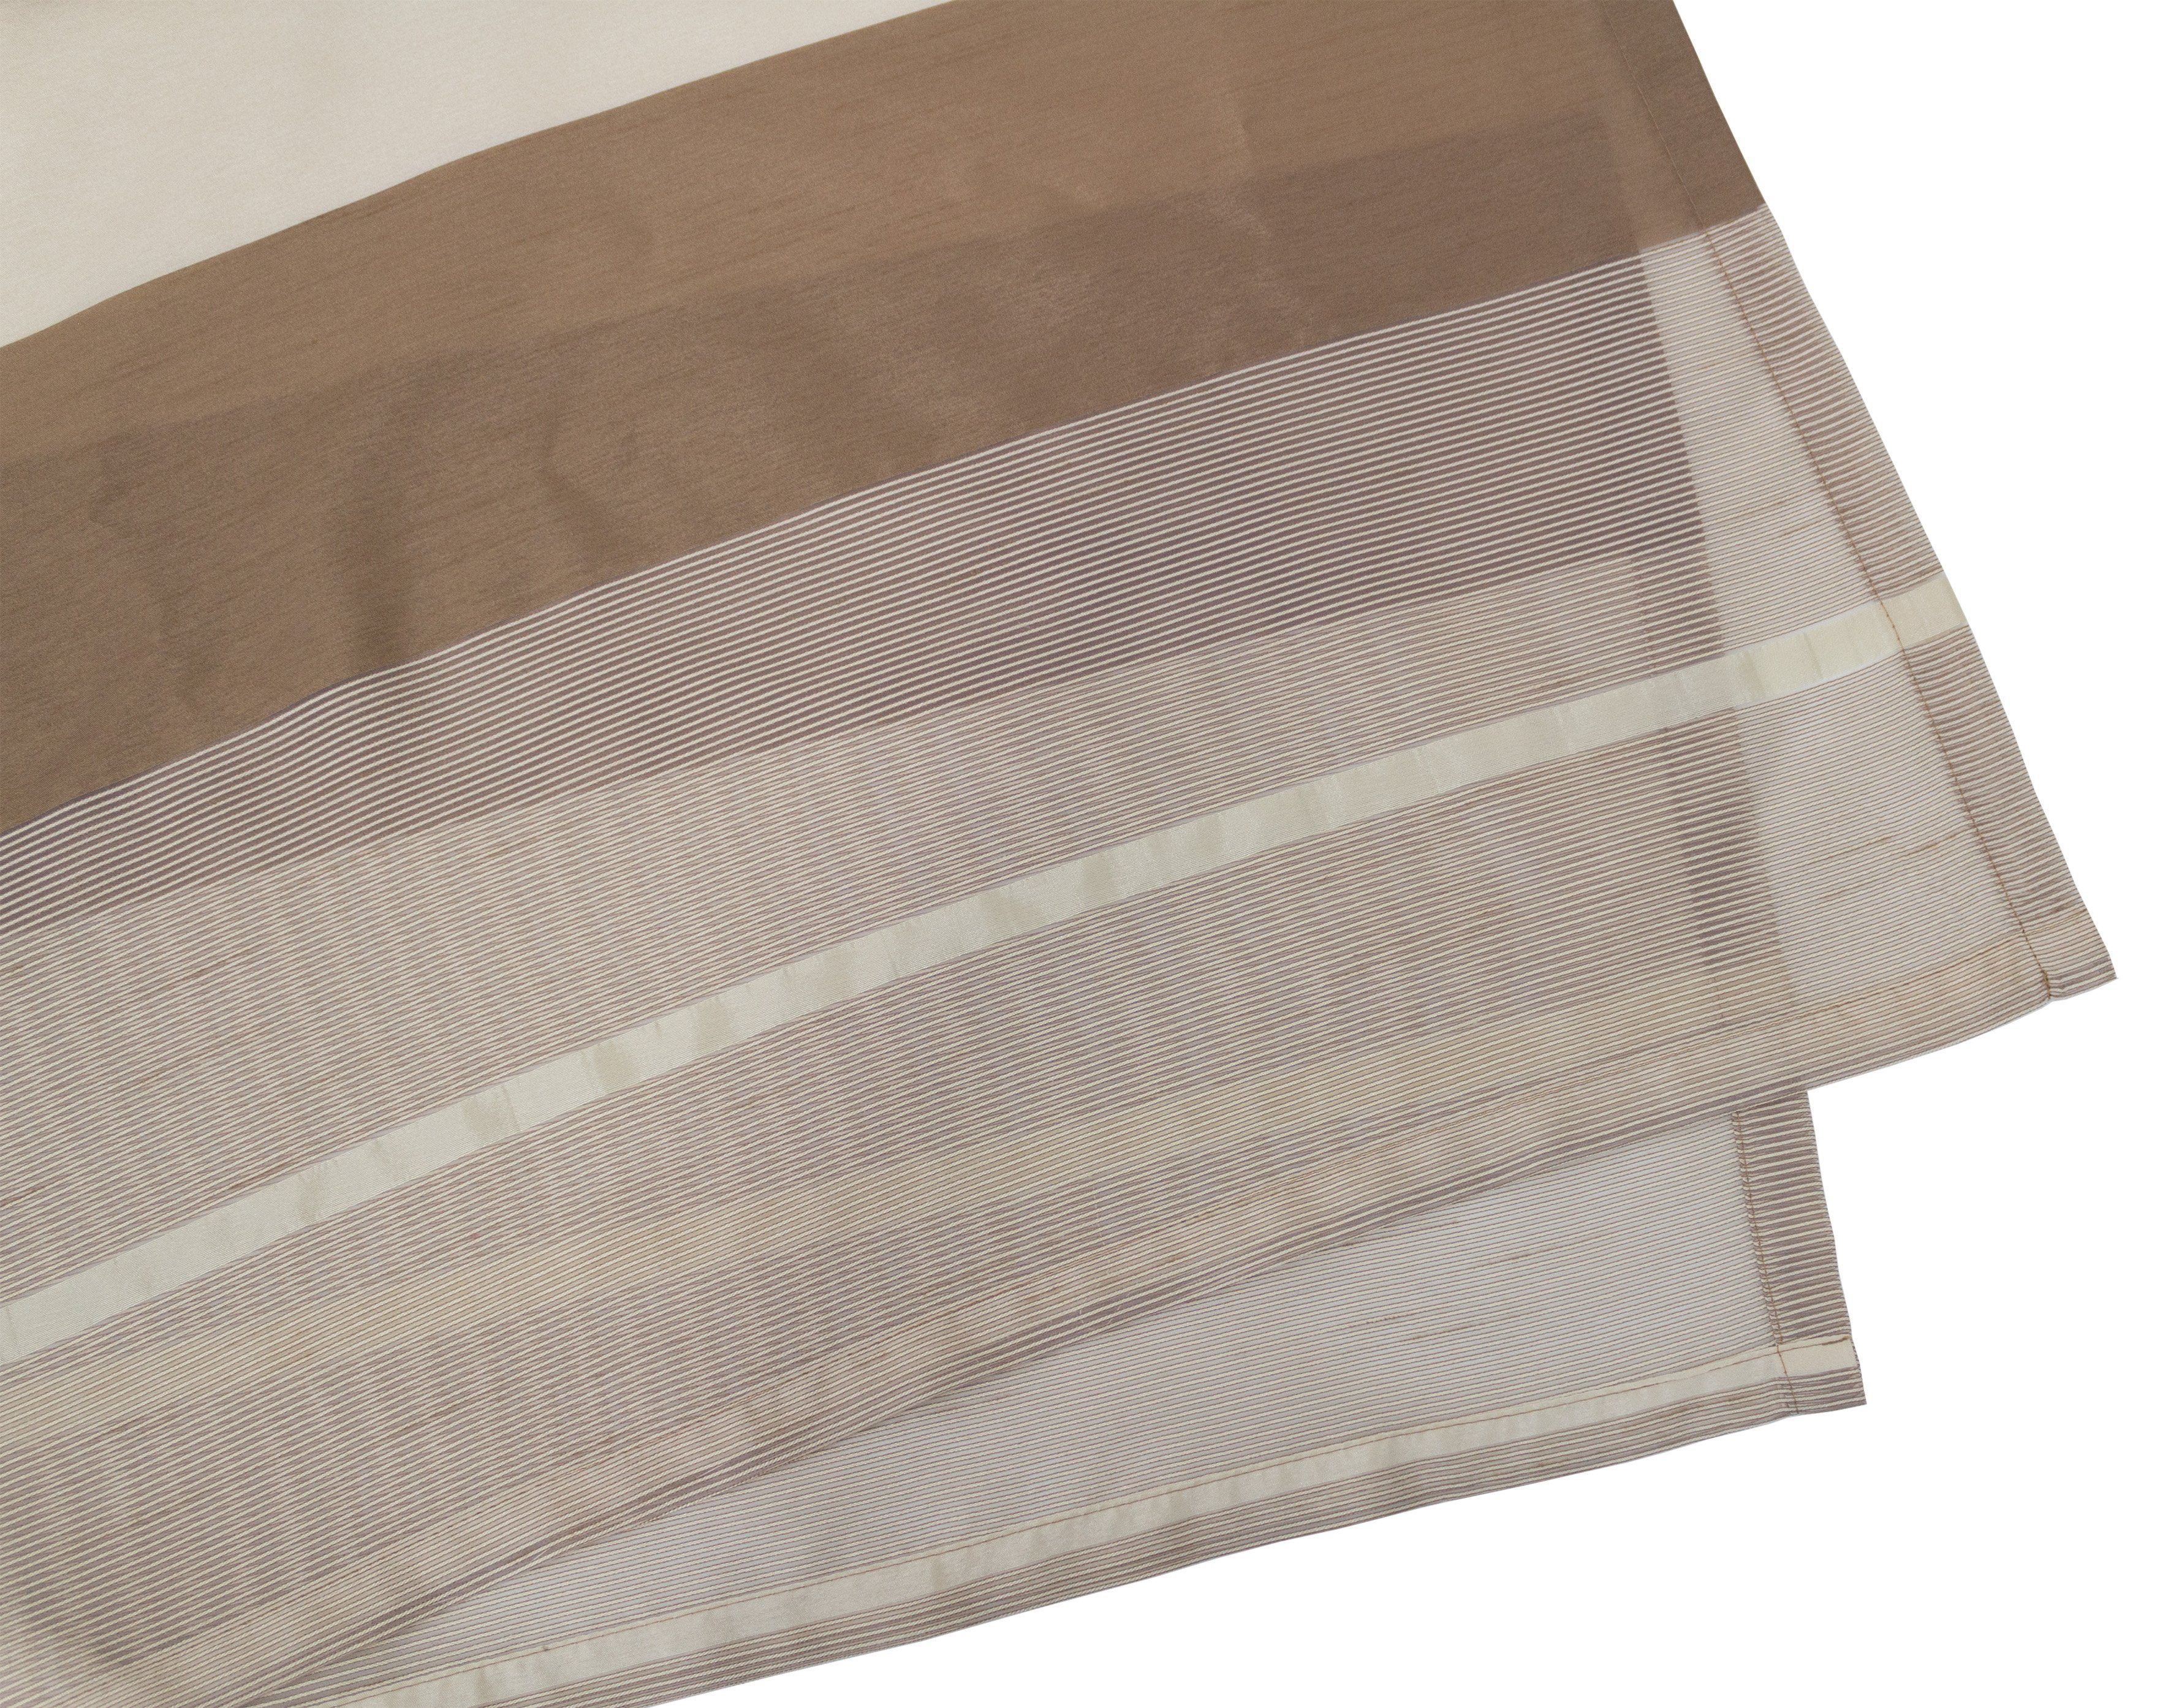 Kräuselband Vorhang Polyester, beige-braun (1 Solea, VHG, Schal St), halbtransparent,